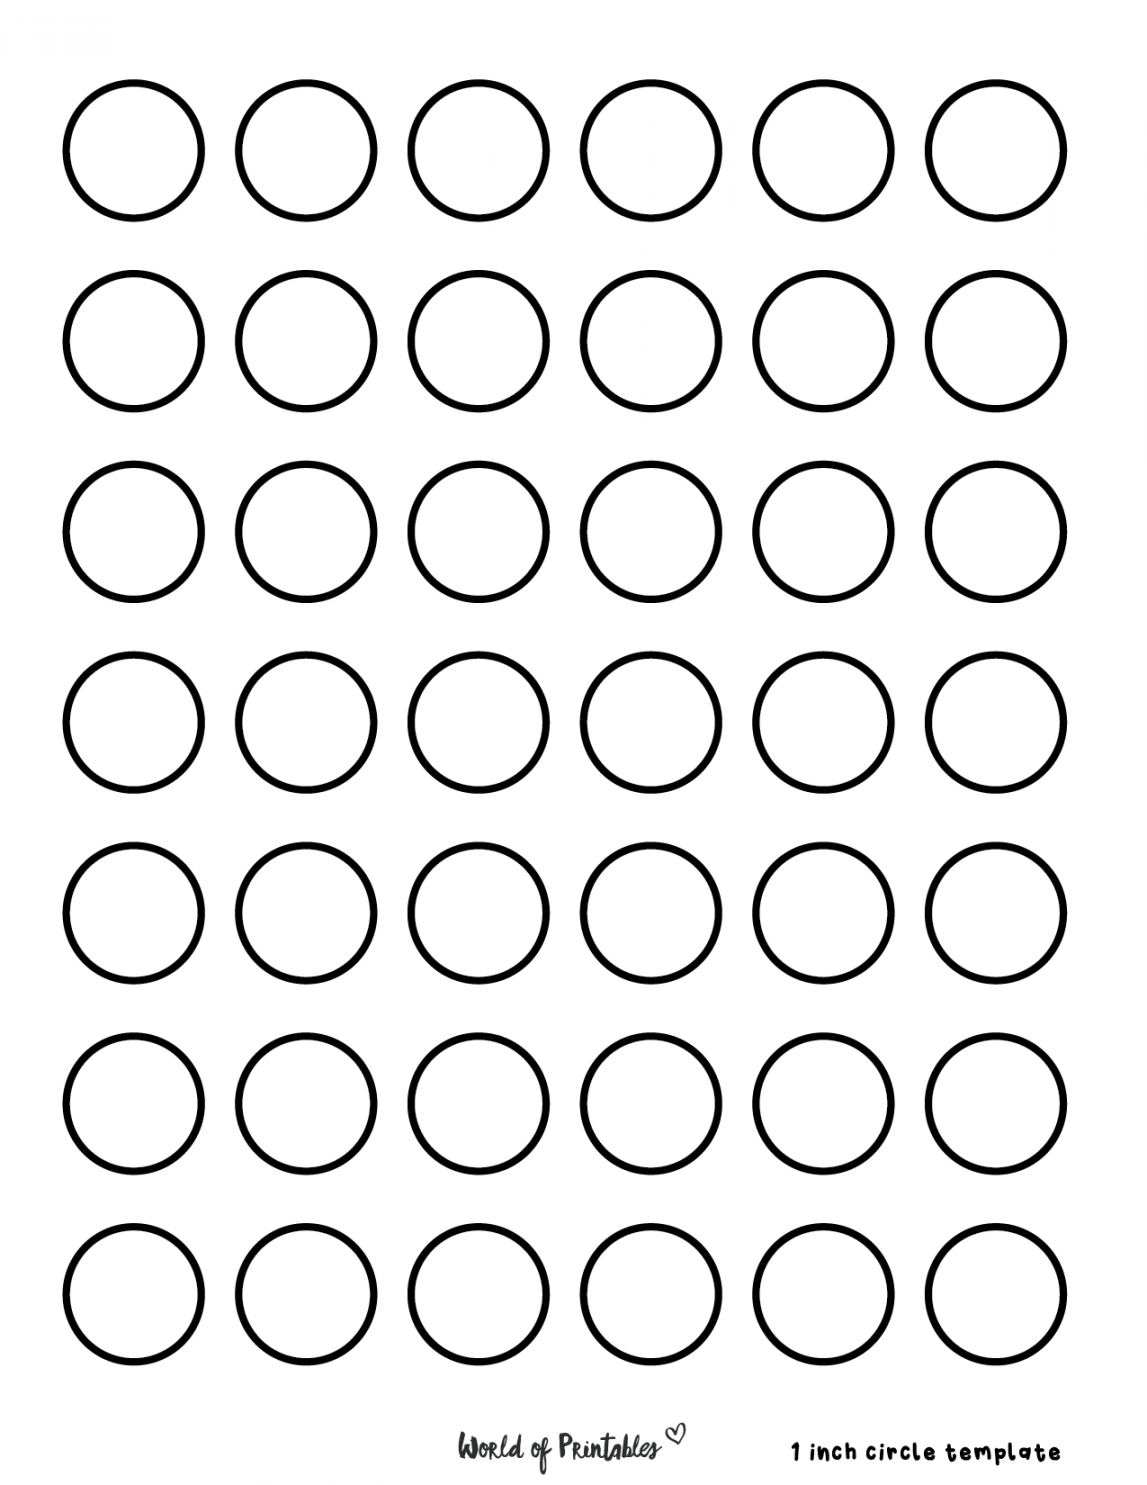 Free Printable Circle Templates - Various Sizes - World of Printables - FREE Printables - 1 Inch Circles